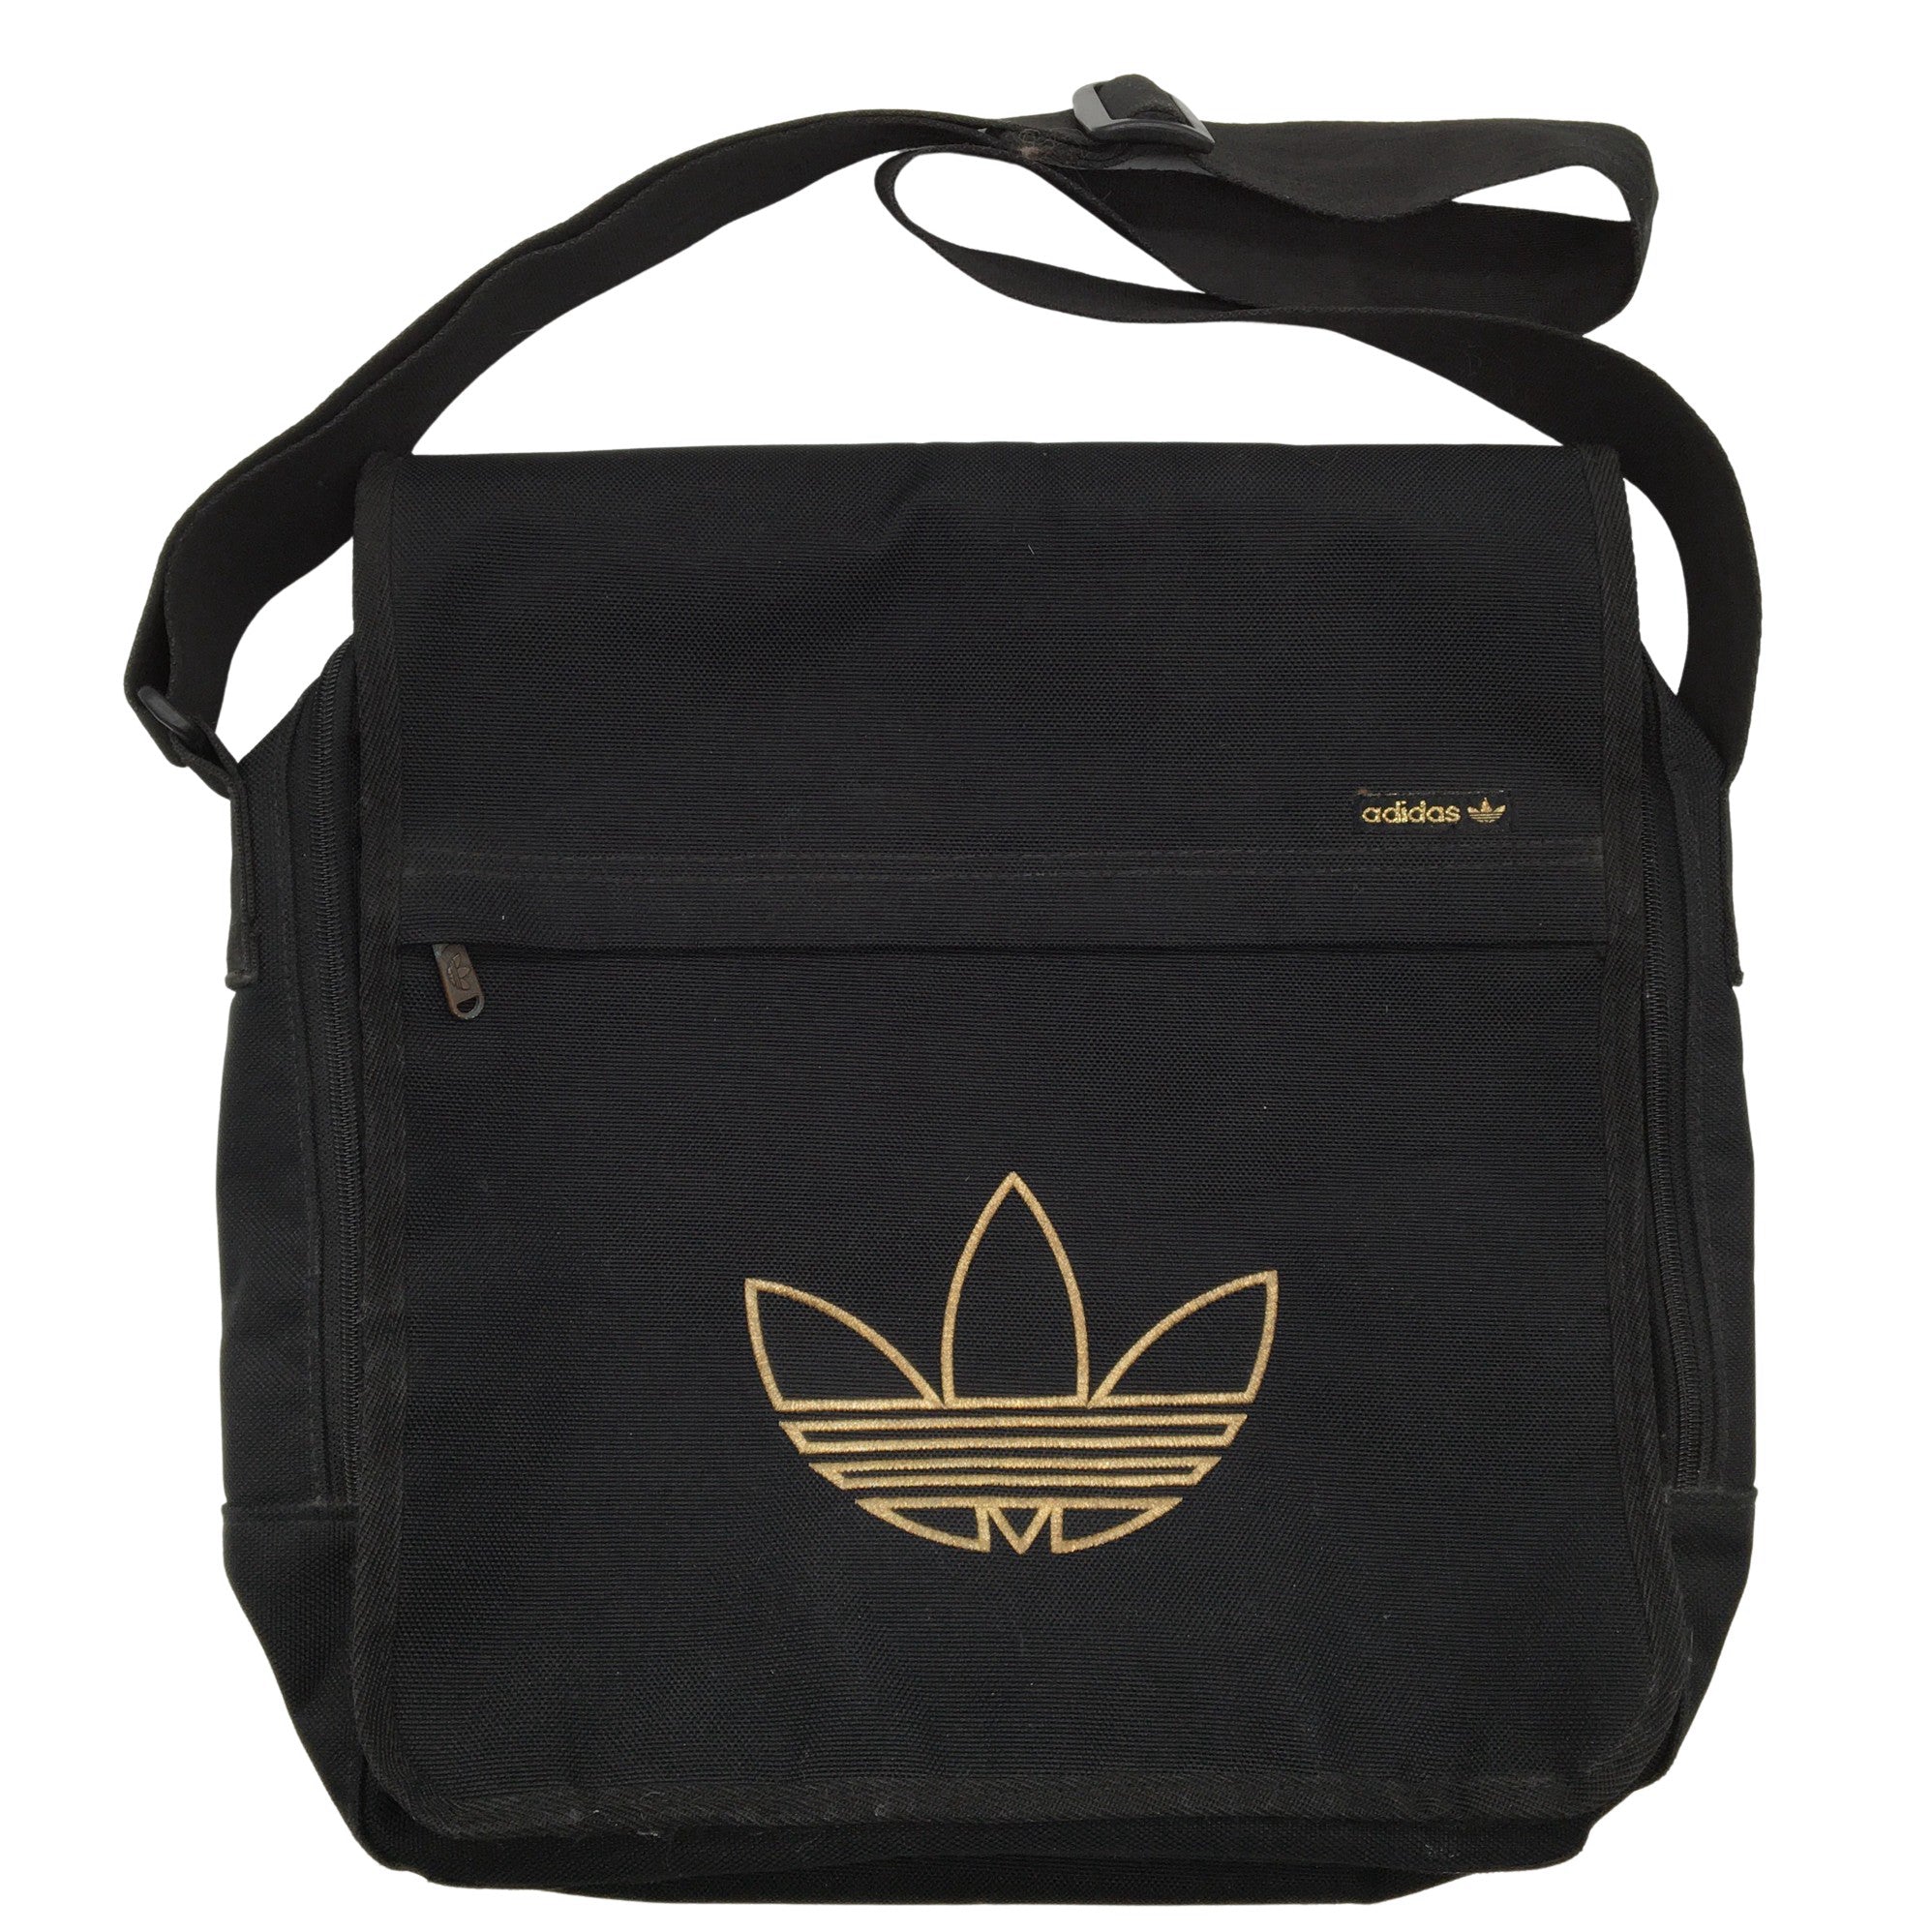 Adidas Shoulder bag, size Midi (Black) Emmy